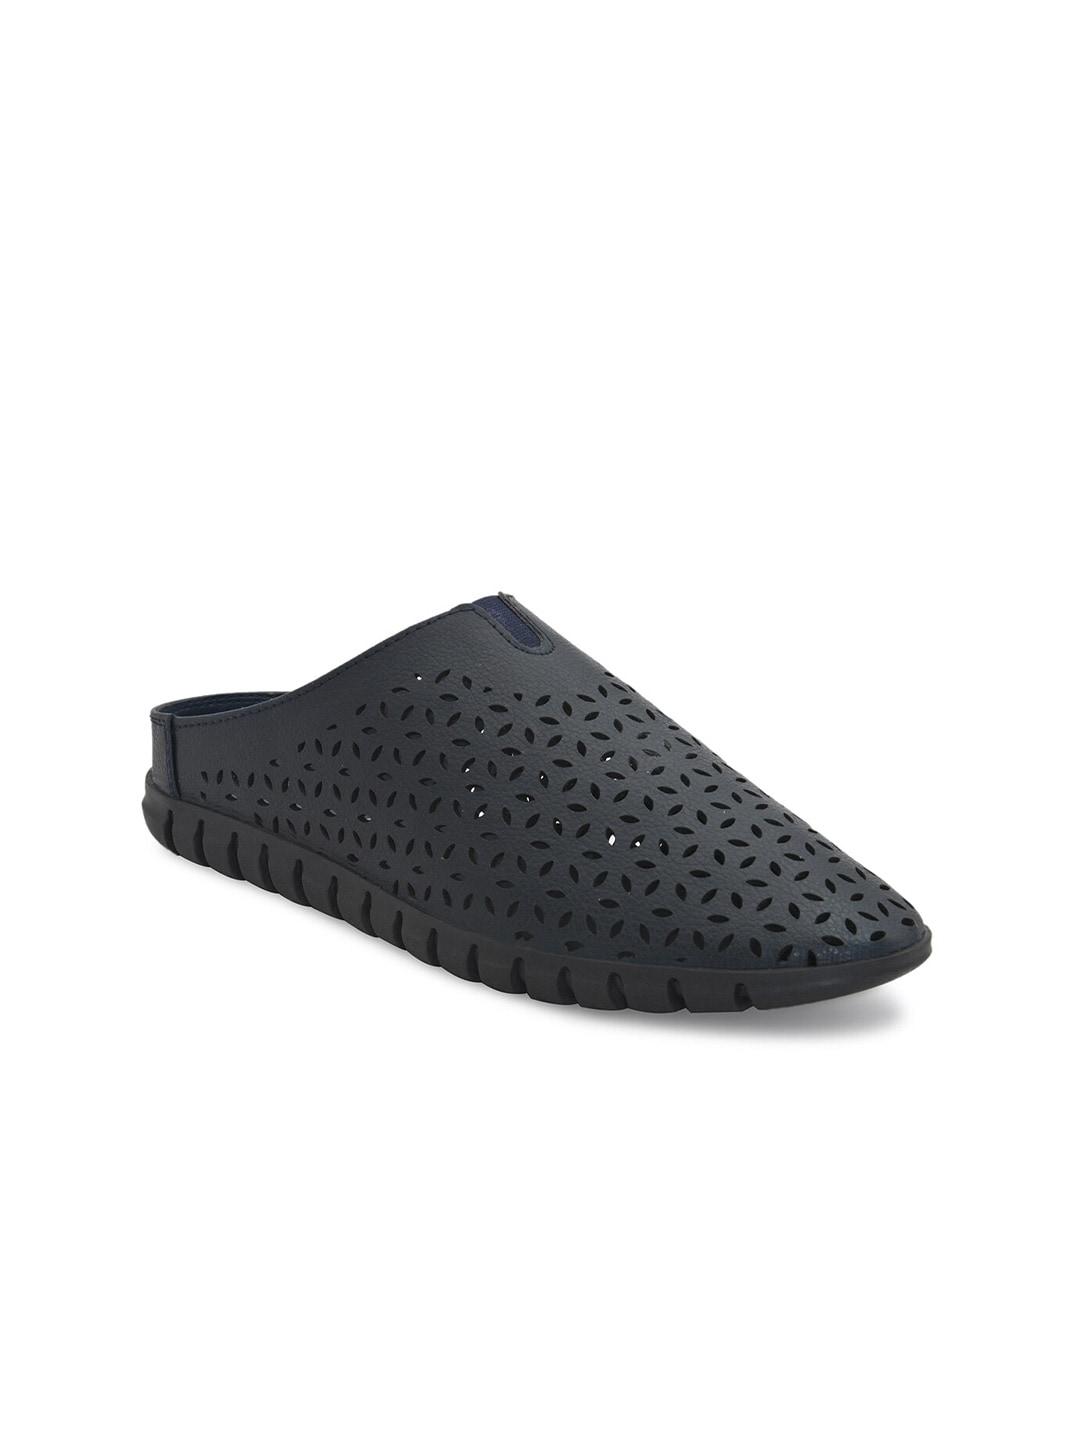 the roadster lifestyle co men navy blue comfort sandals